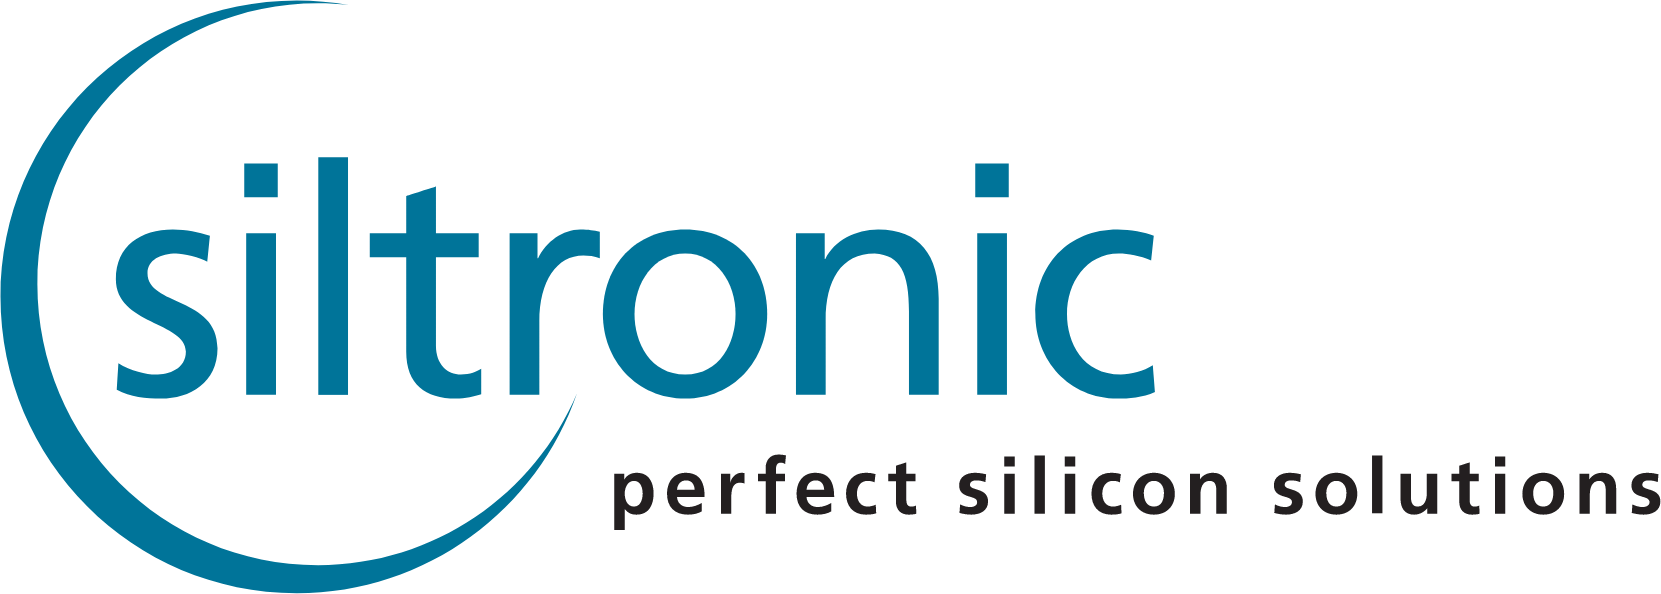 Siltronic logo large (transparent PNG)